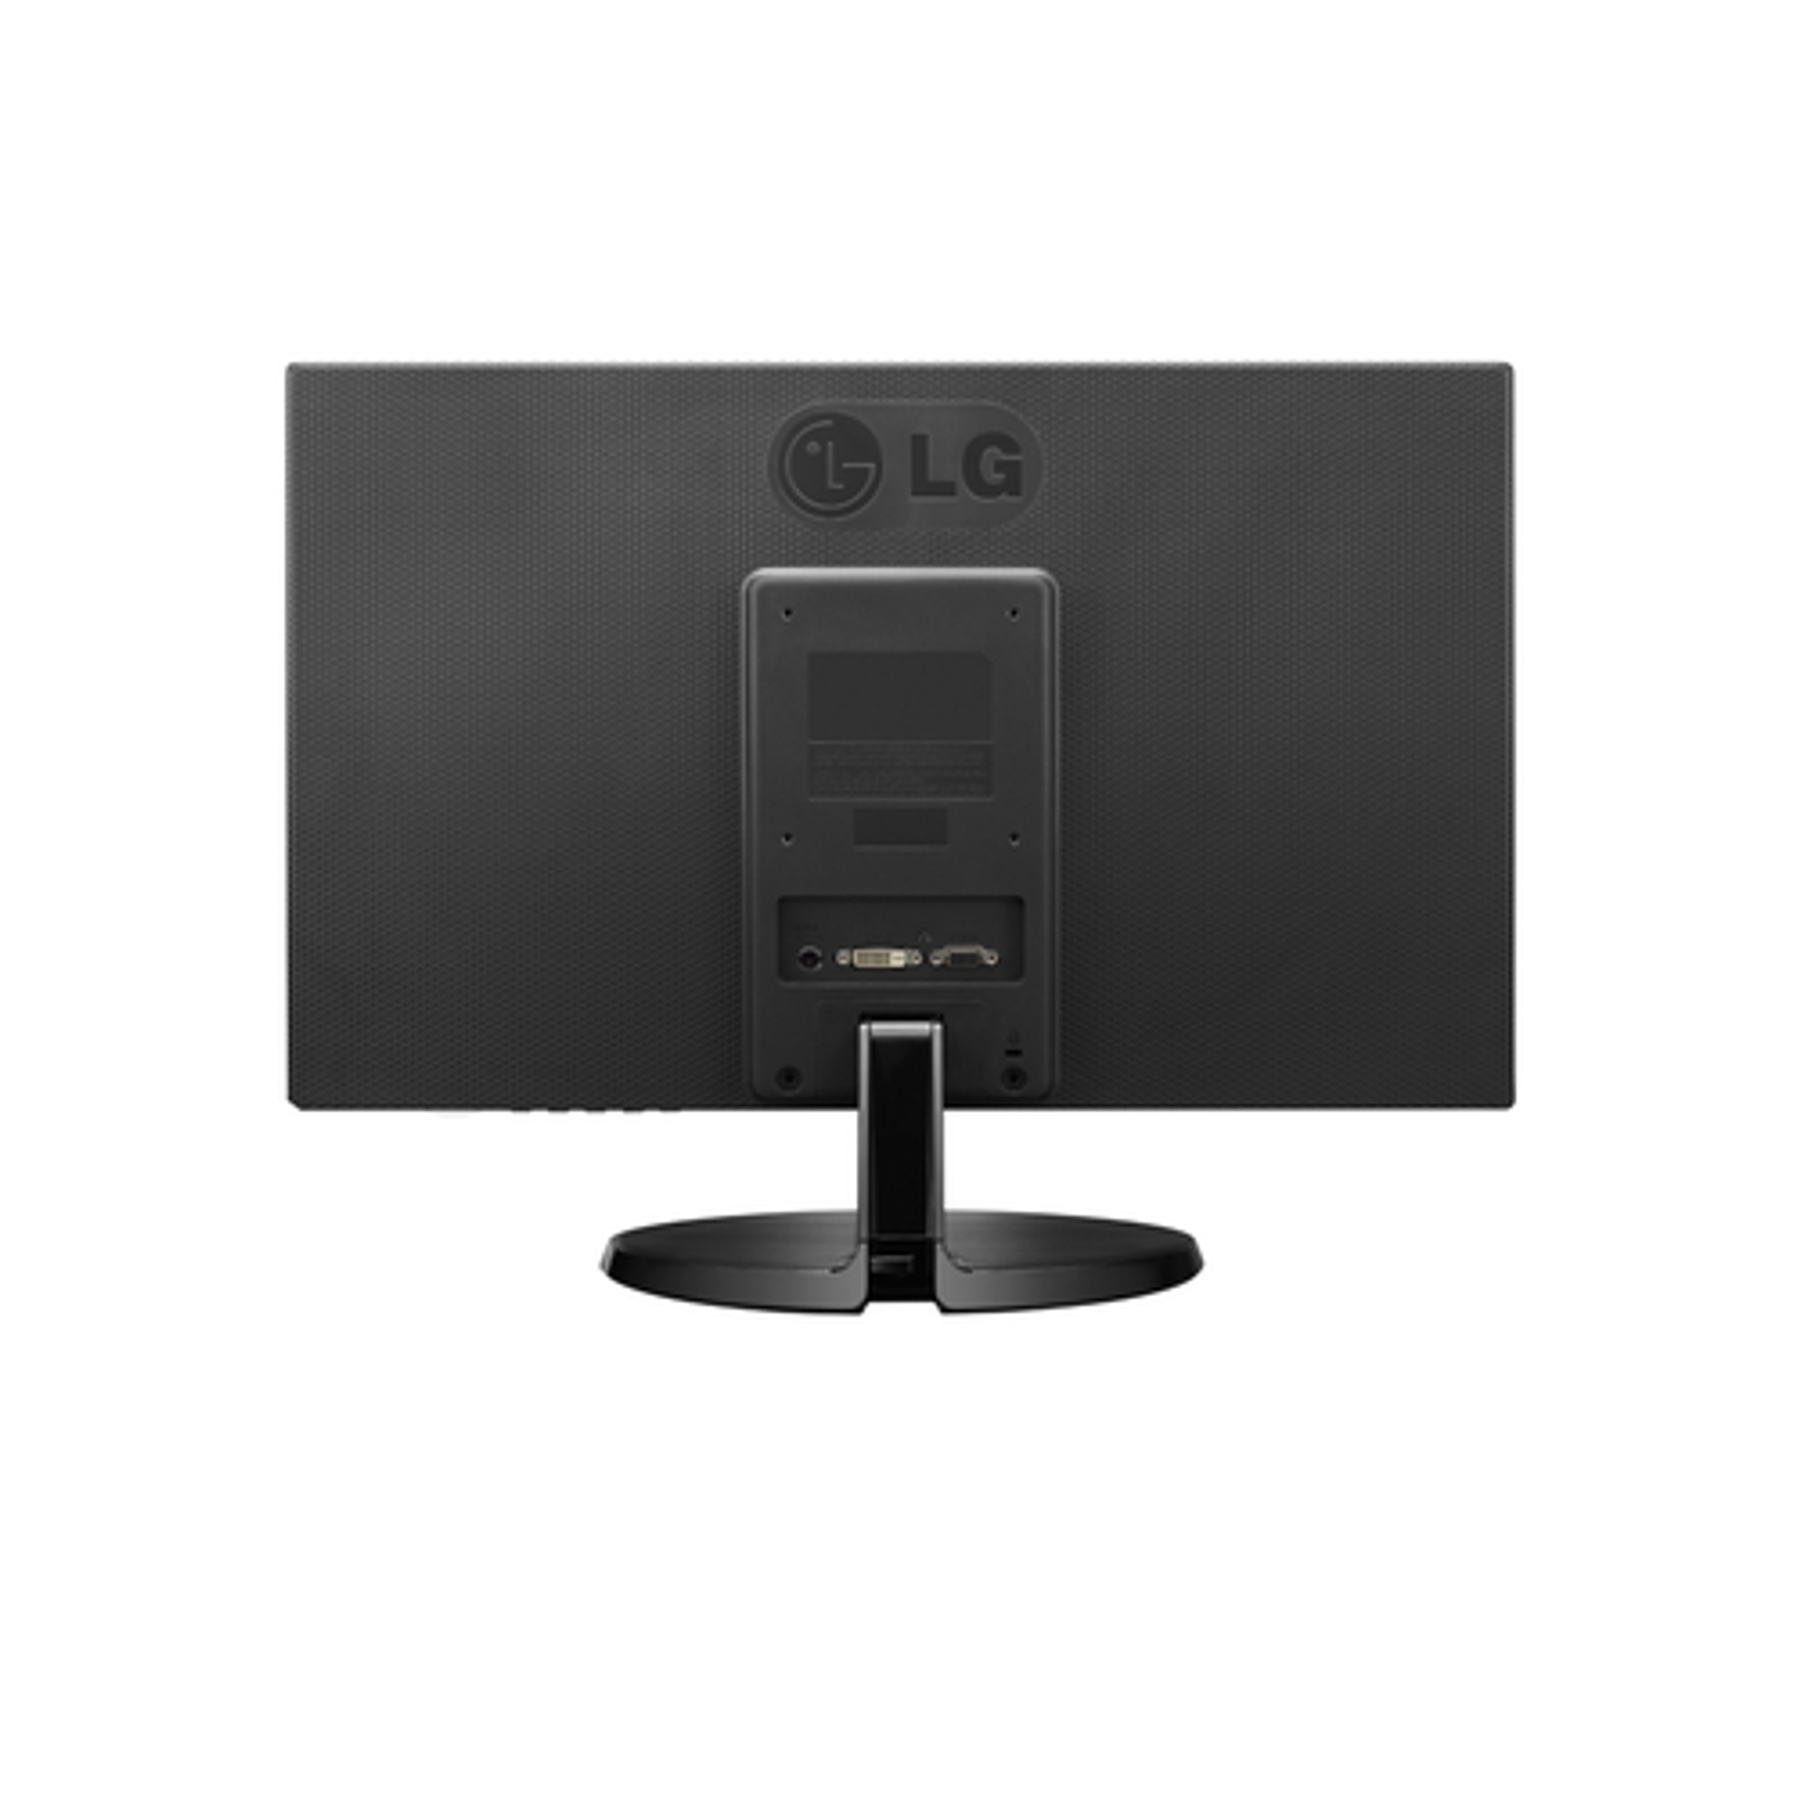 LG Monitor 19M38H-B 18.5